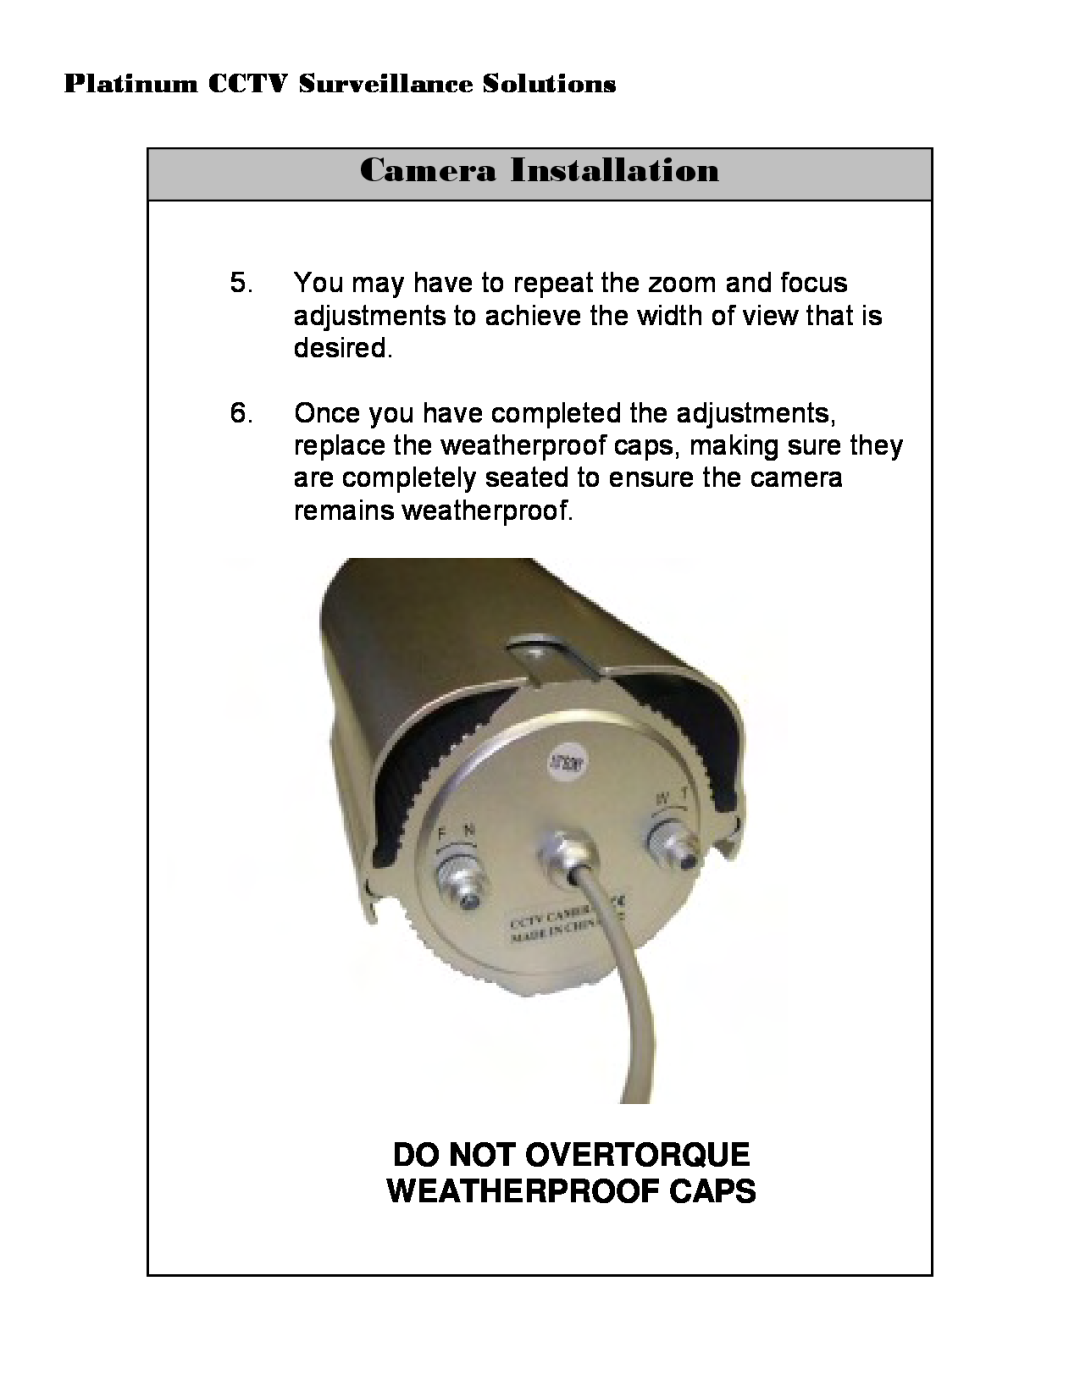 Sony CD-9255 Do Not Overtorque Weatherproof Caps, Camera Installation, Platinum CCTV Surveillance Solutions 